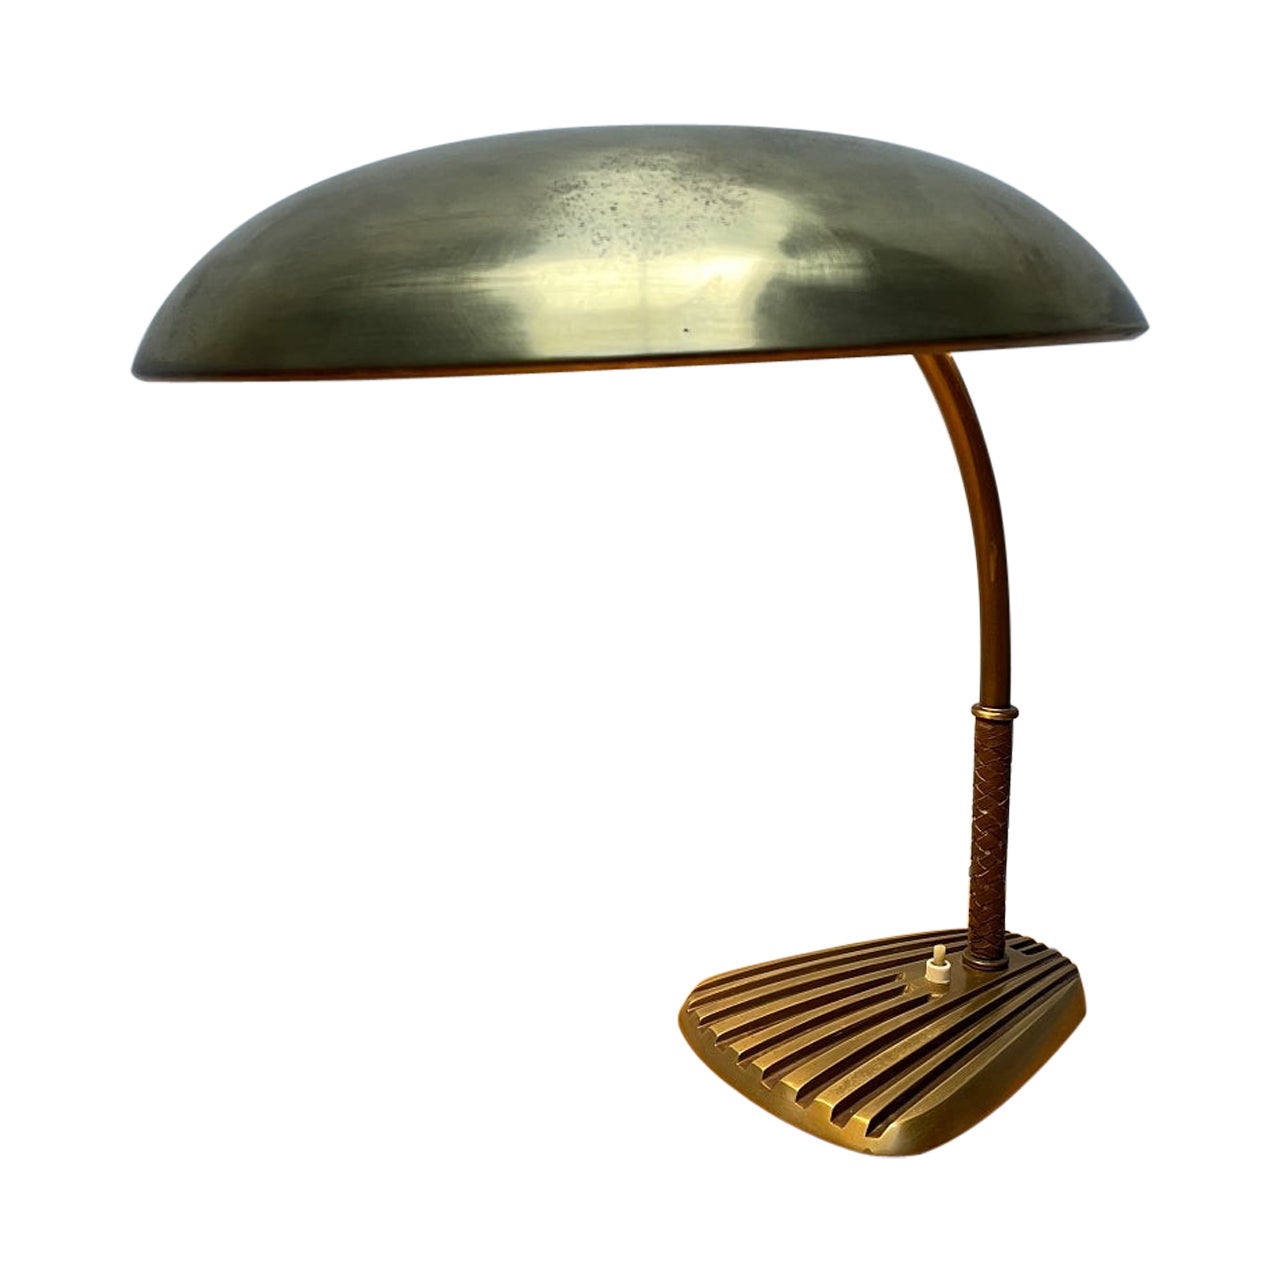 Josef Frank J.T. Kalmar Brass & Leather Desk Table Lamp, 1950s, Austria For Sale